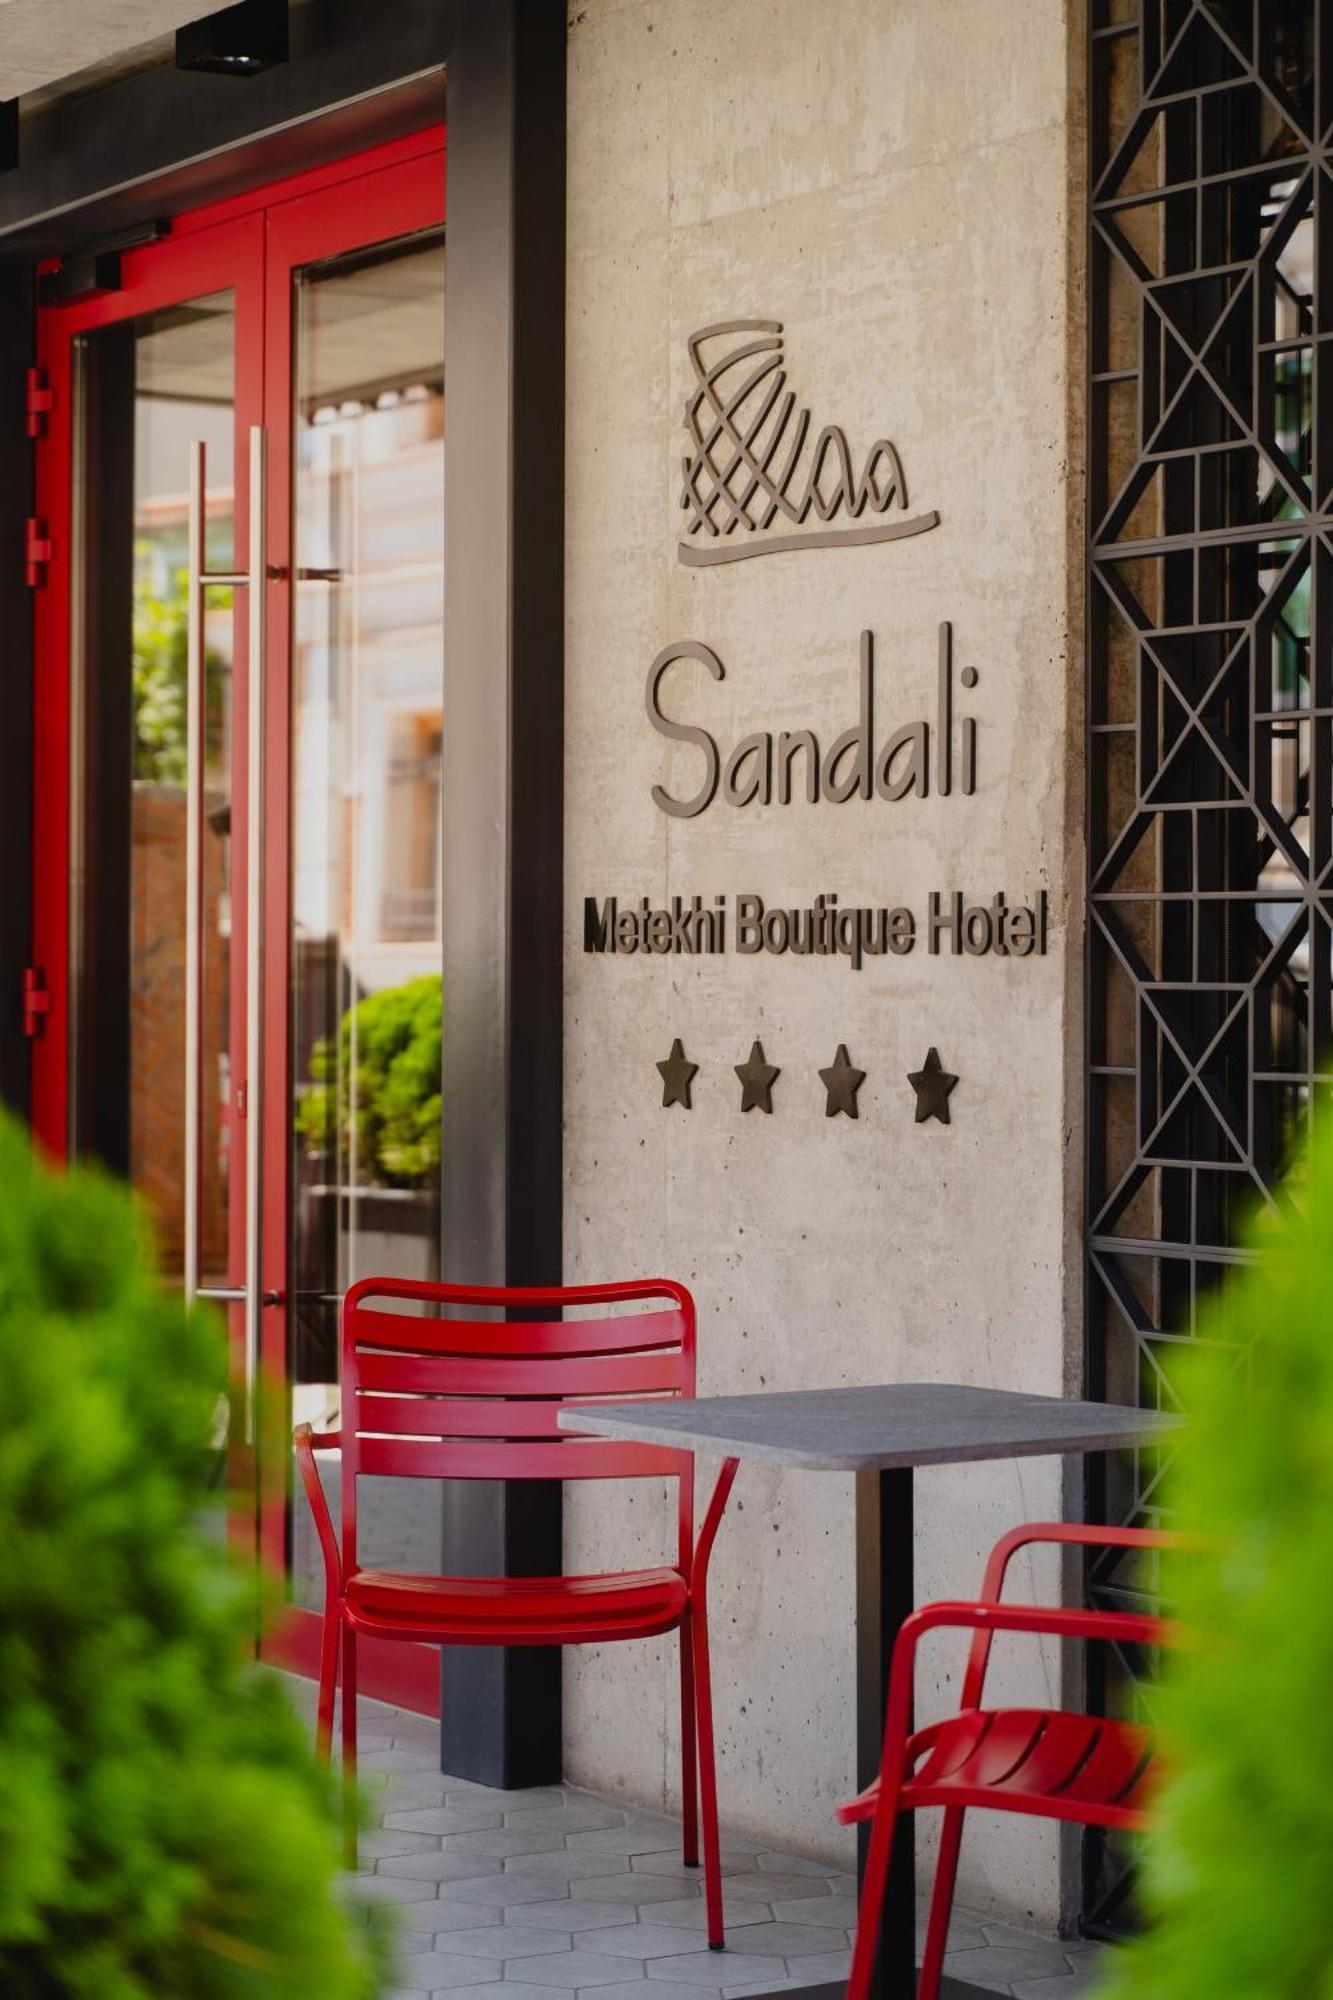 Sandali Metekhi Boutique Hotel Tbilisi Exterior photo